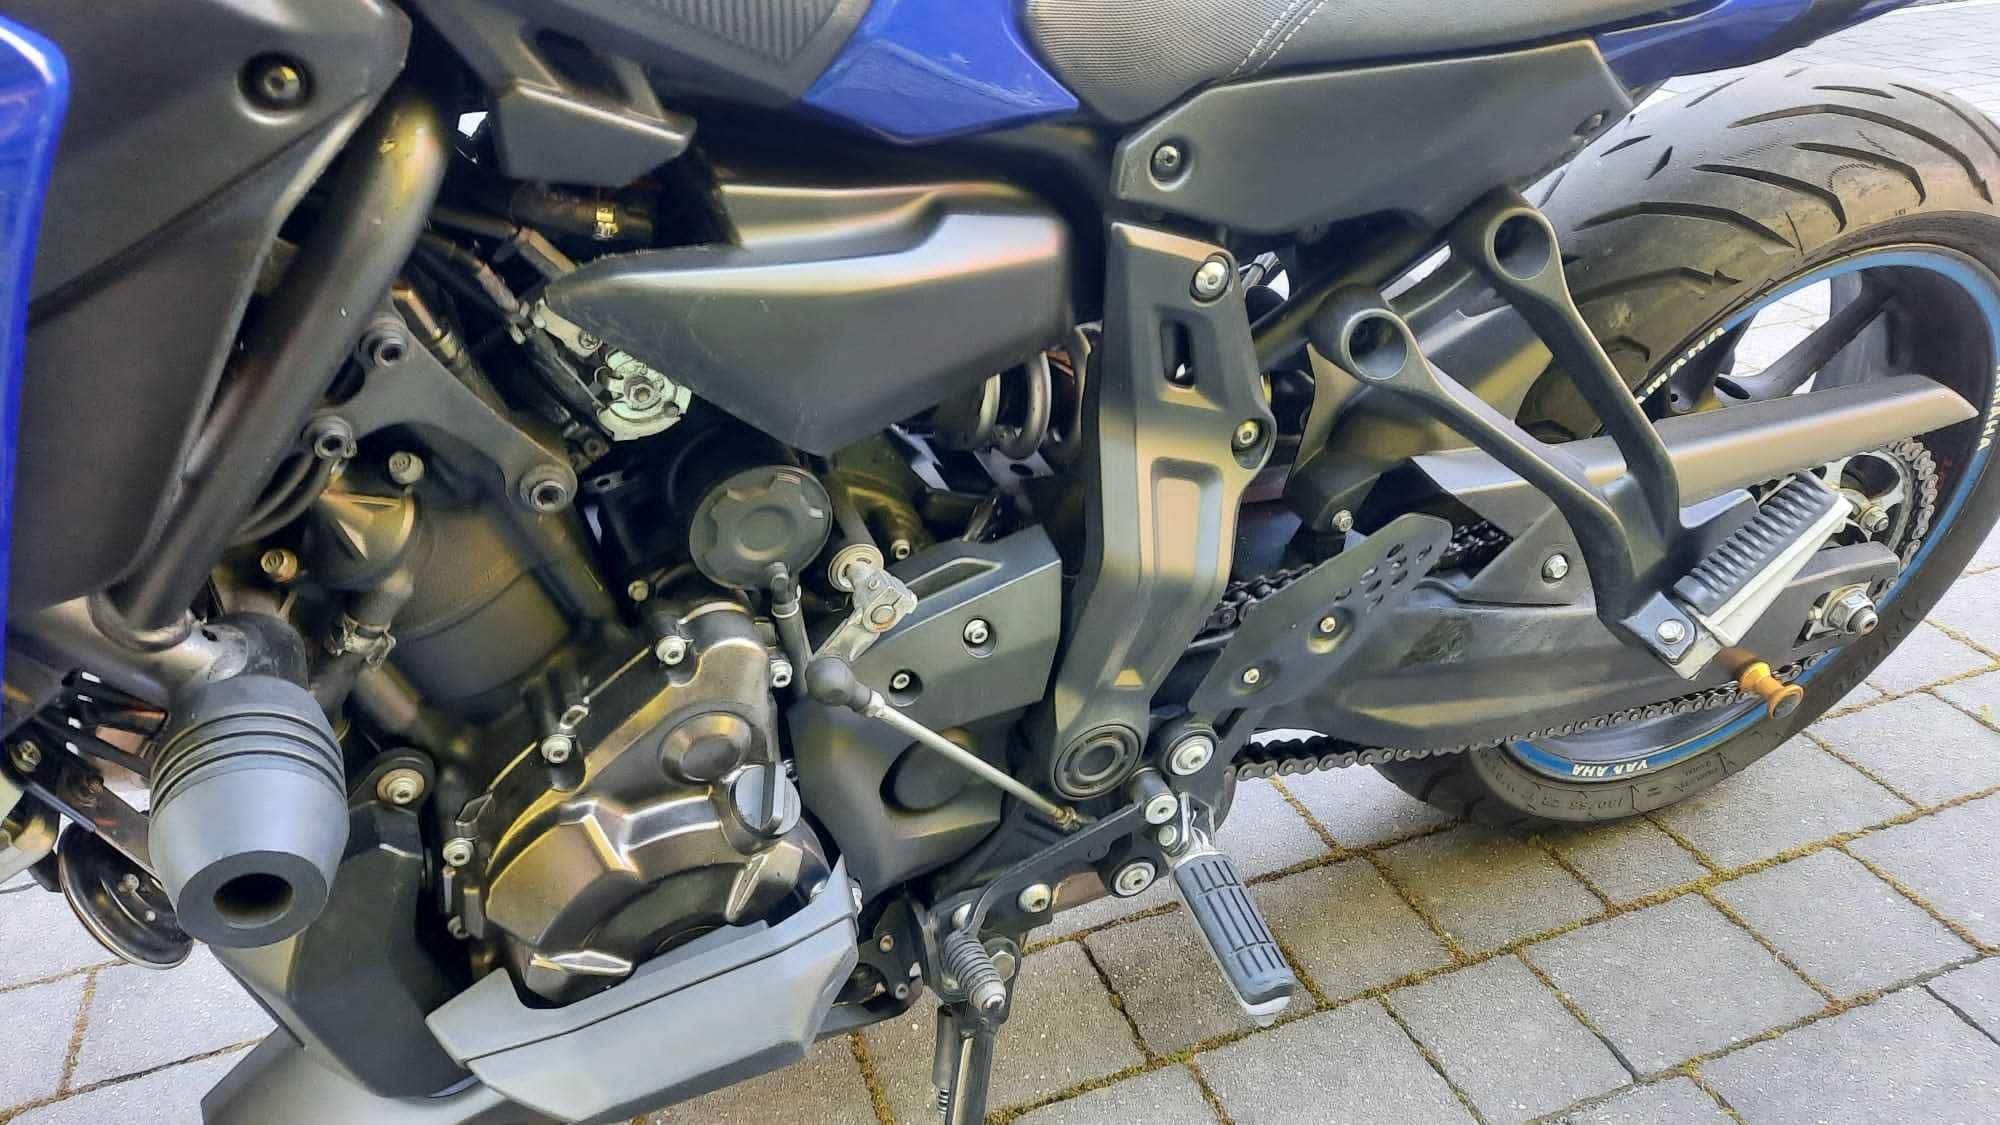 Motocykl Yamaha MT-07 Tracer